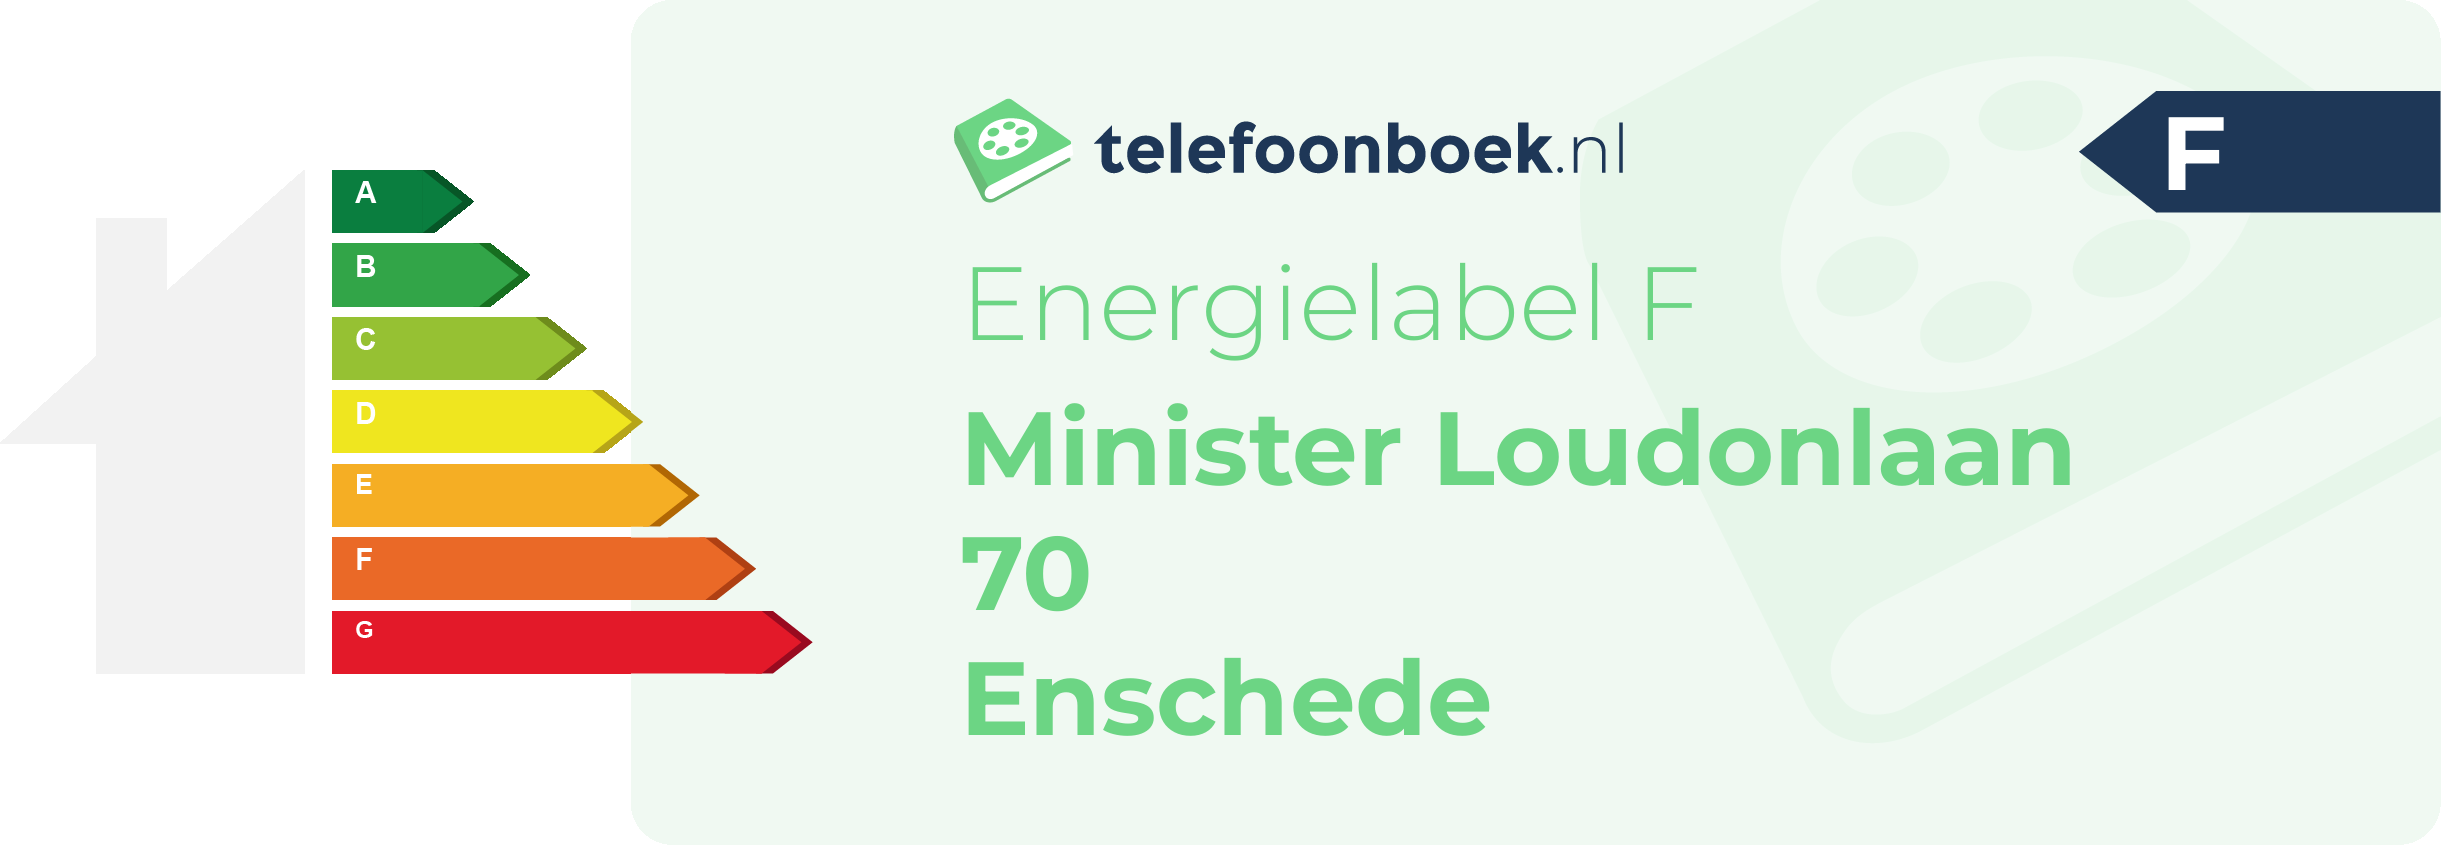 Energielabel Minister Loudonlaan 70 Enschede